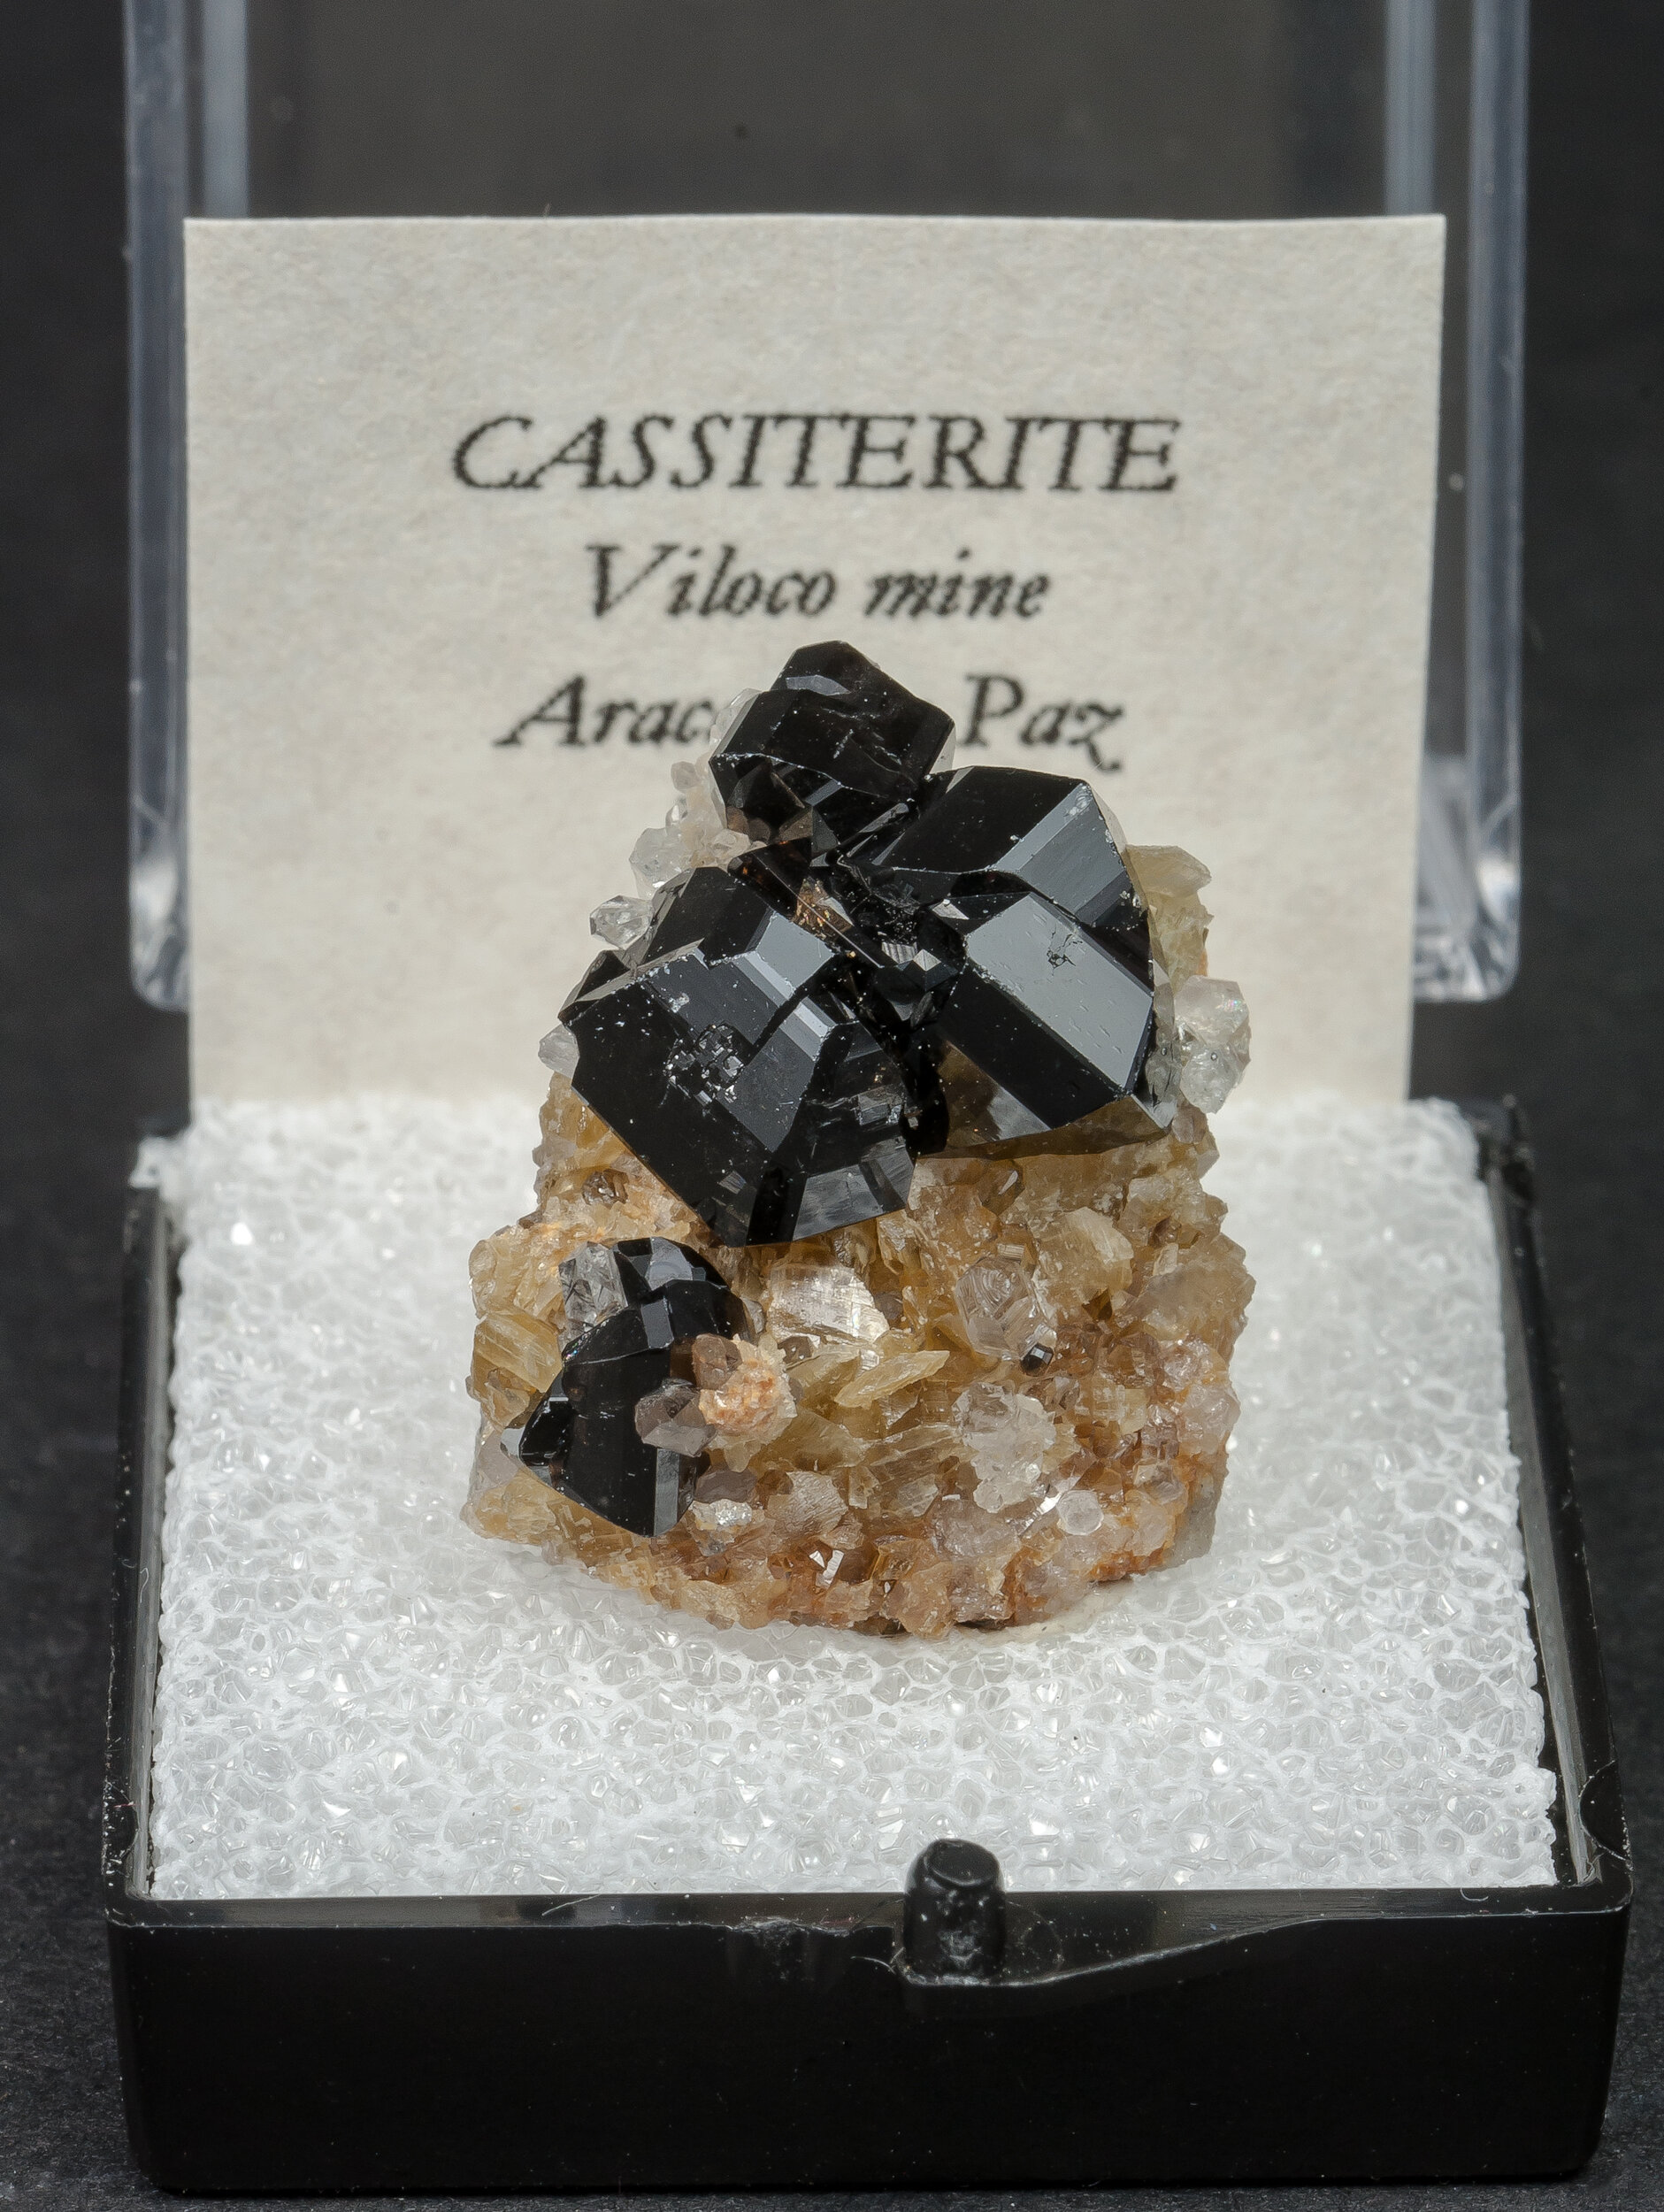 specimens/s_imagesAO0/Cassiterite-TLA14AO0f1.jpg